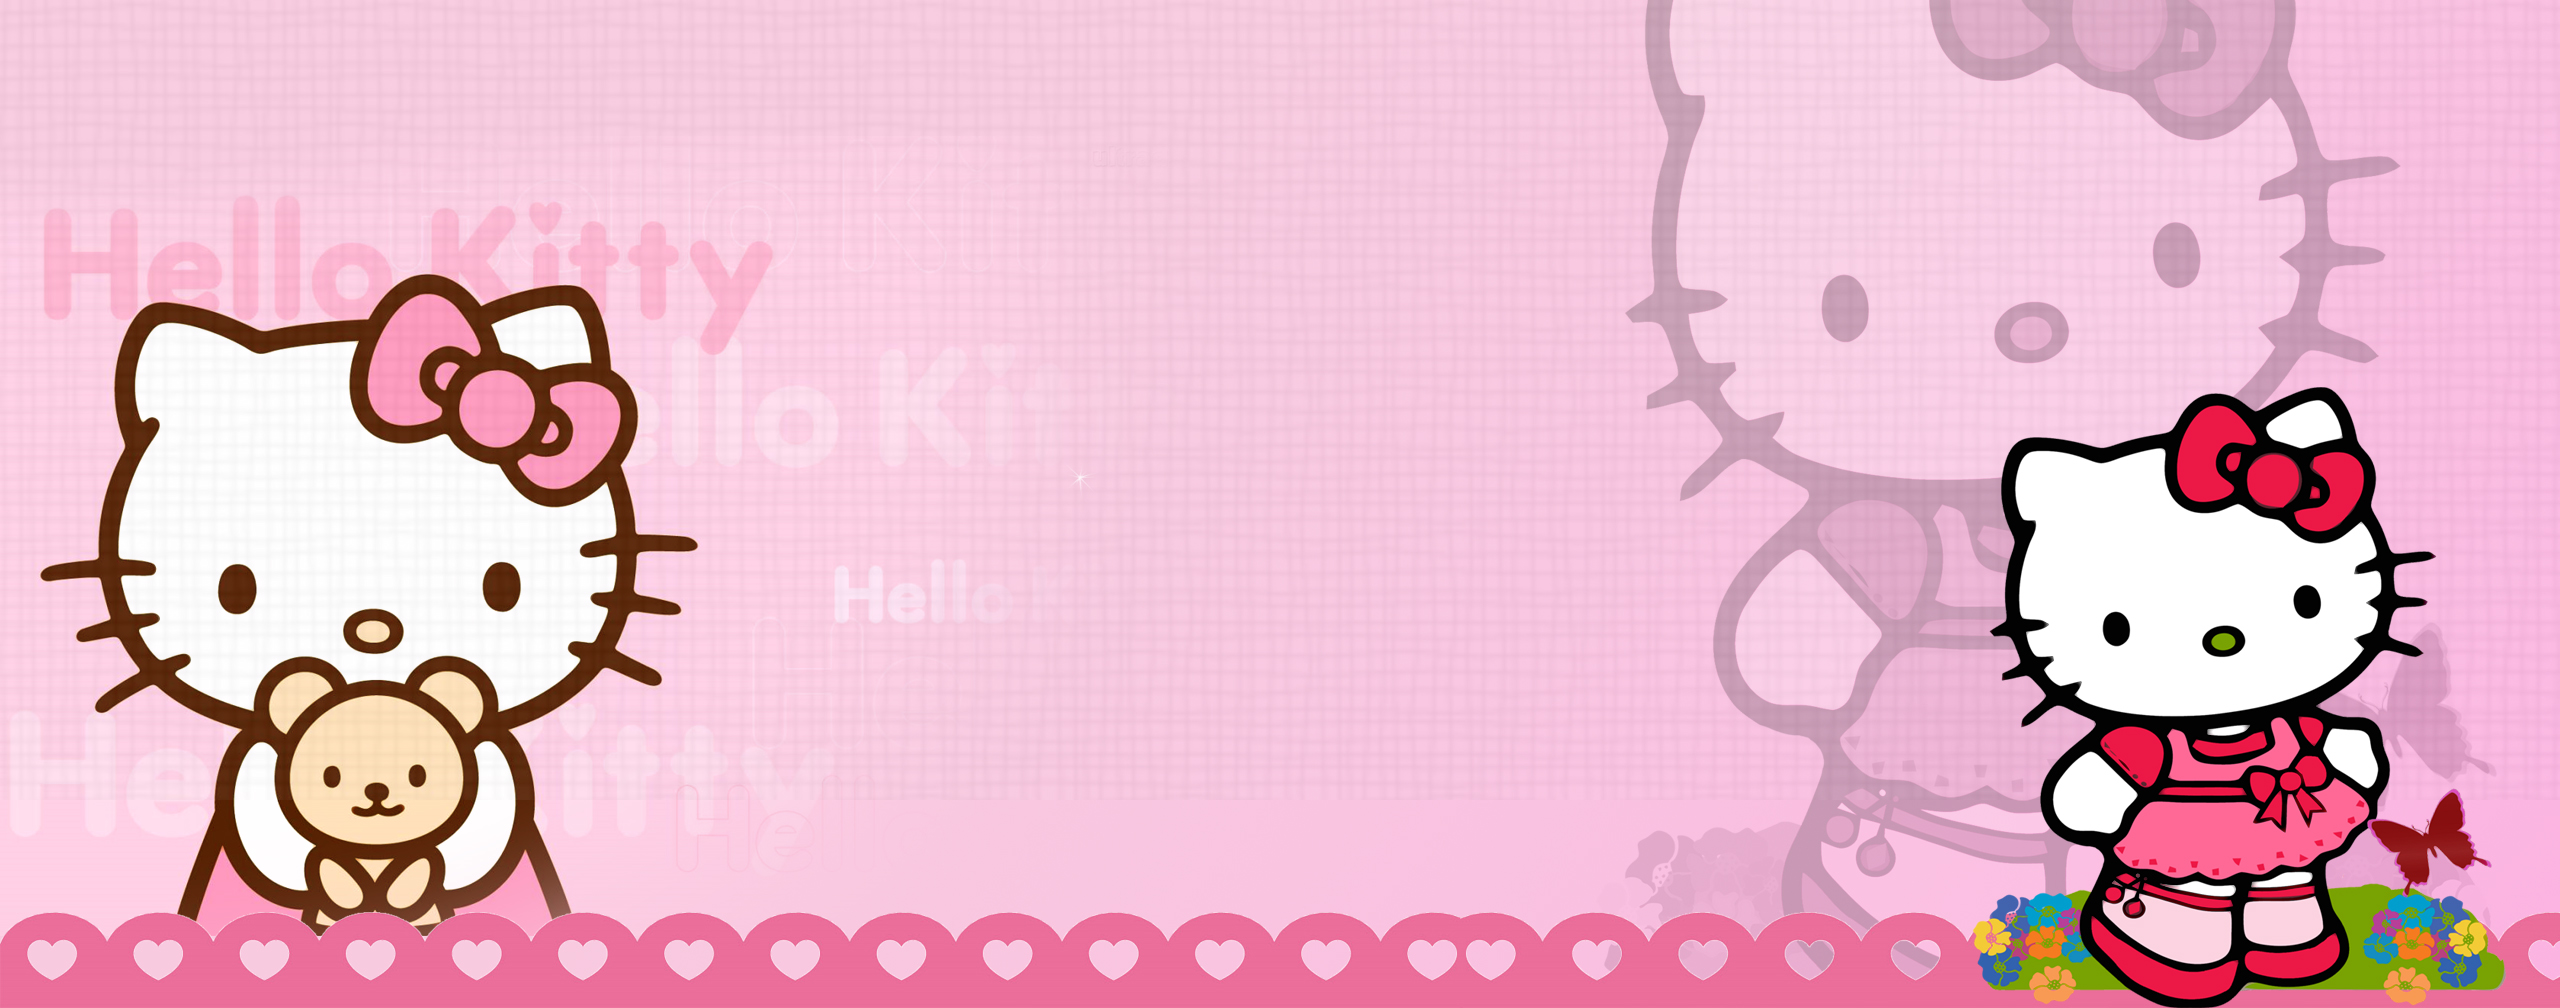 Hello Kitty Dual Monitor Wallp Brh Deviantart